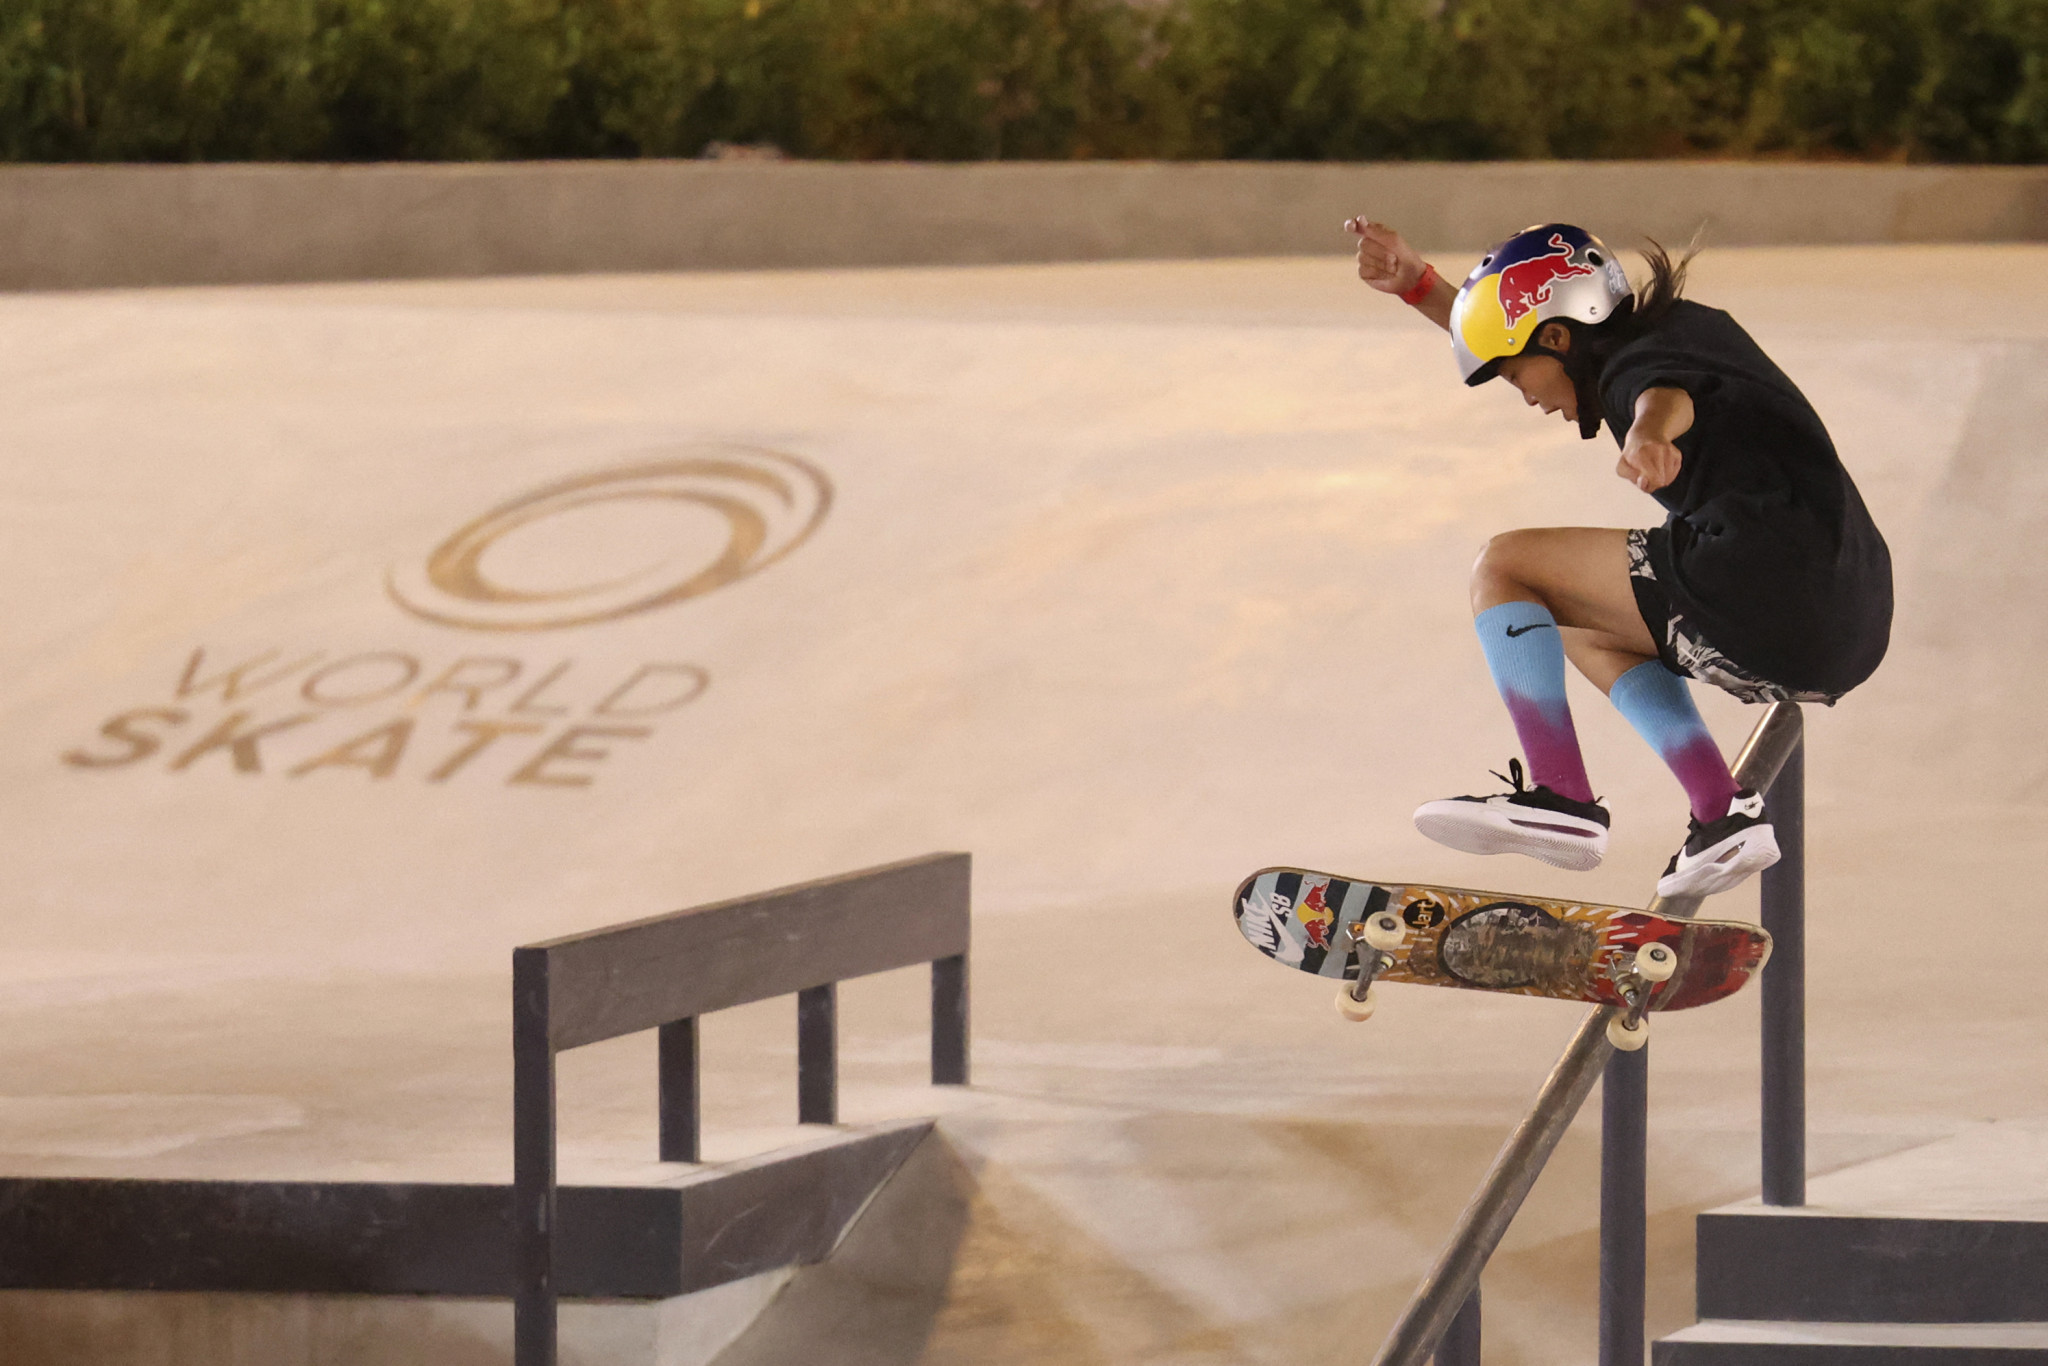 Akama and Onodera lead street skateboarding semi-finals at World Championships in Sharjah